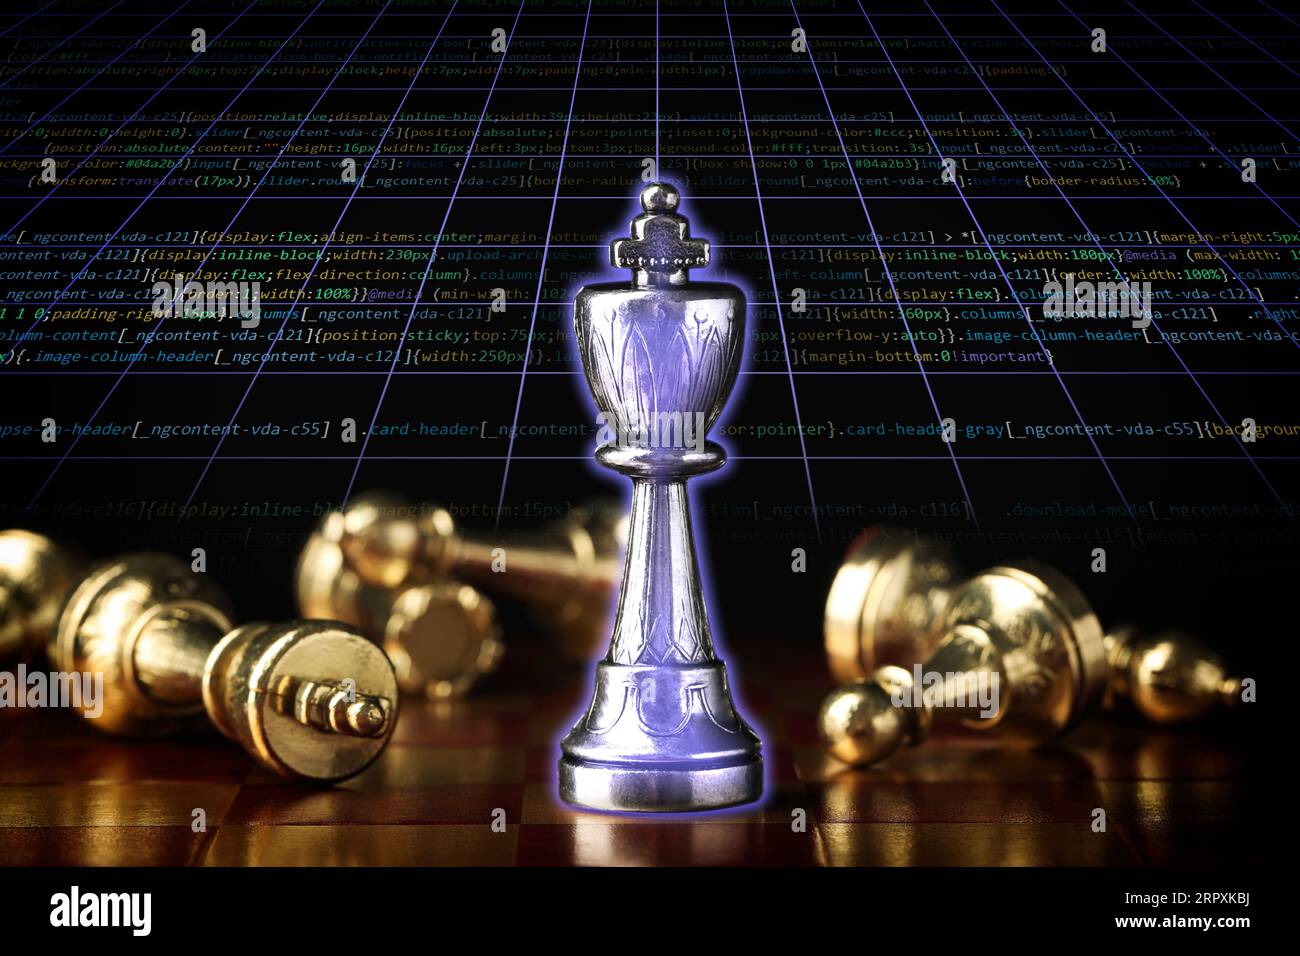 margins : chess codes